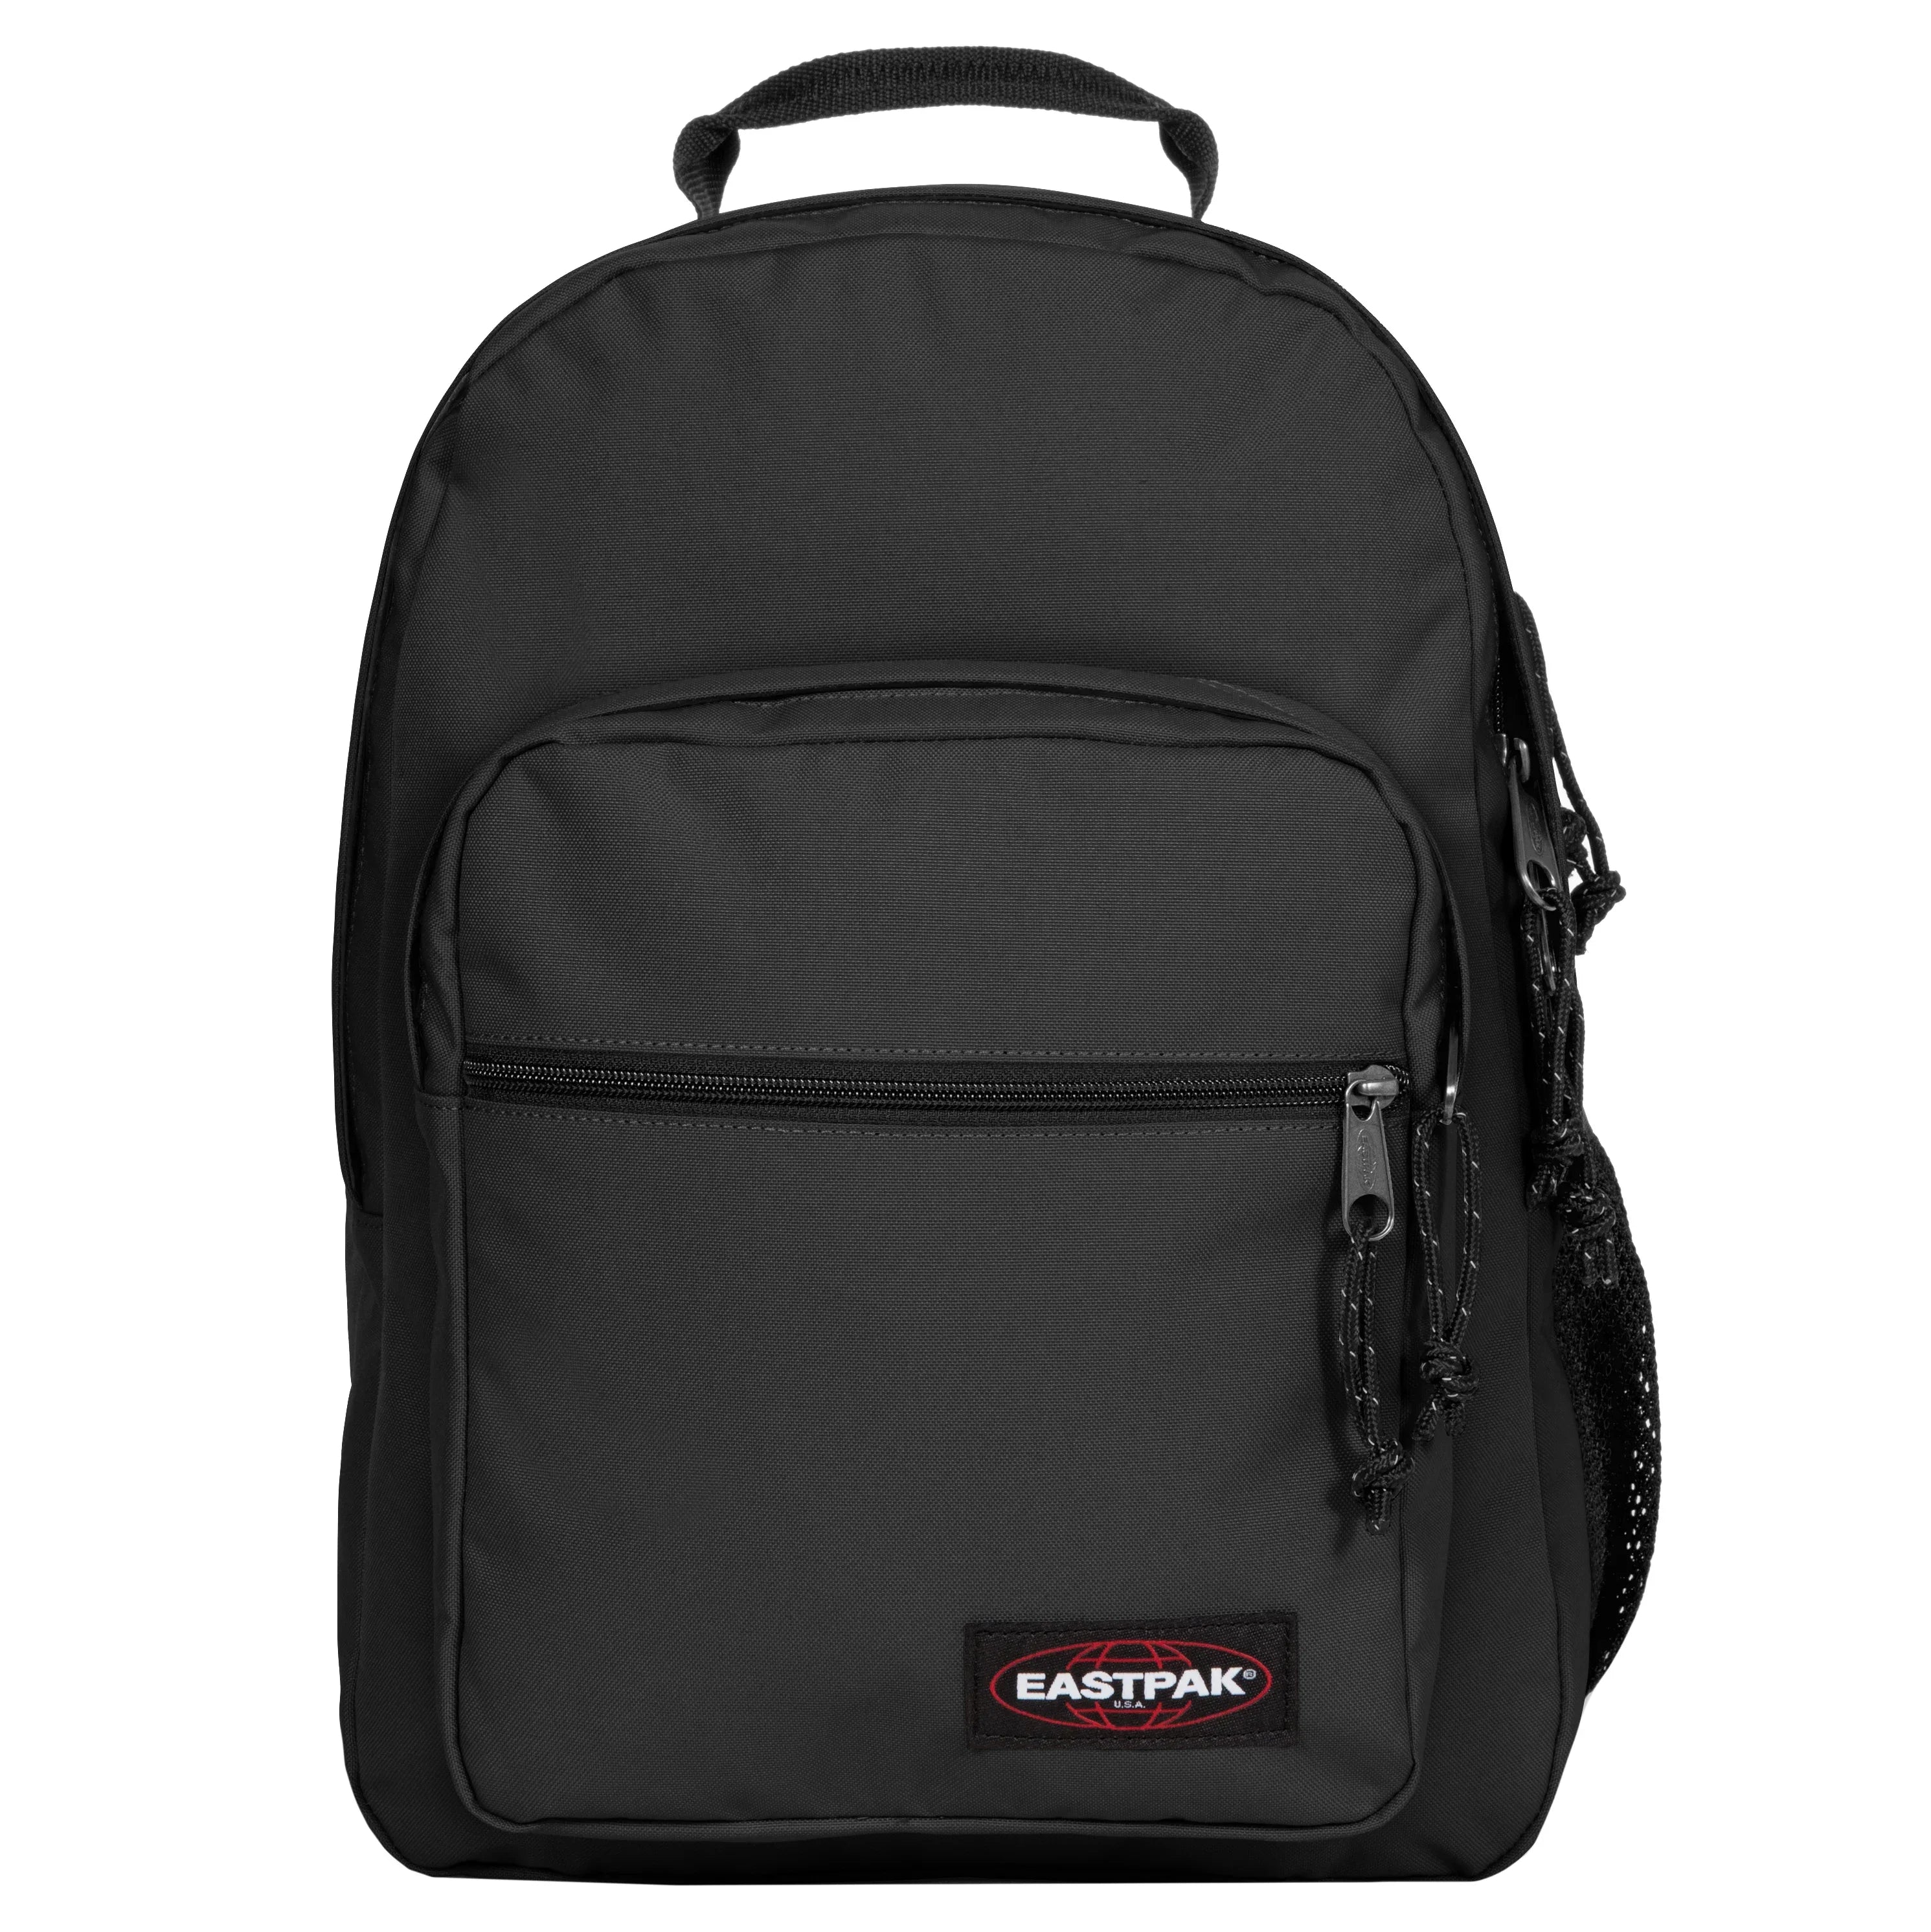 Eastpak Authentic Morius Laptop Backpack 43 cm - Triple Denim